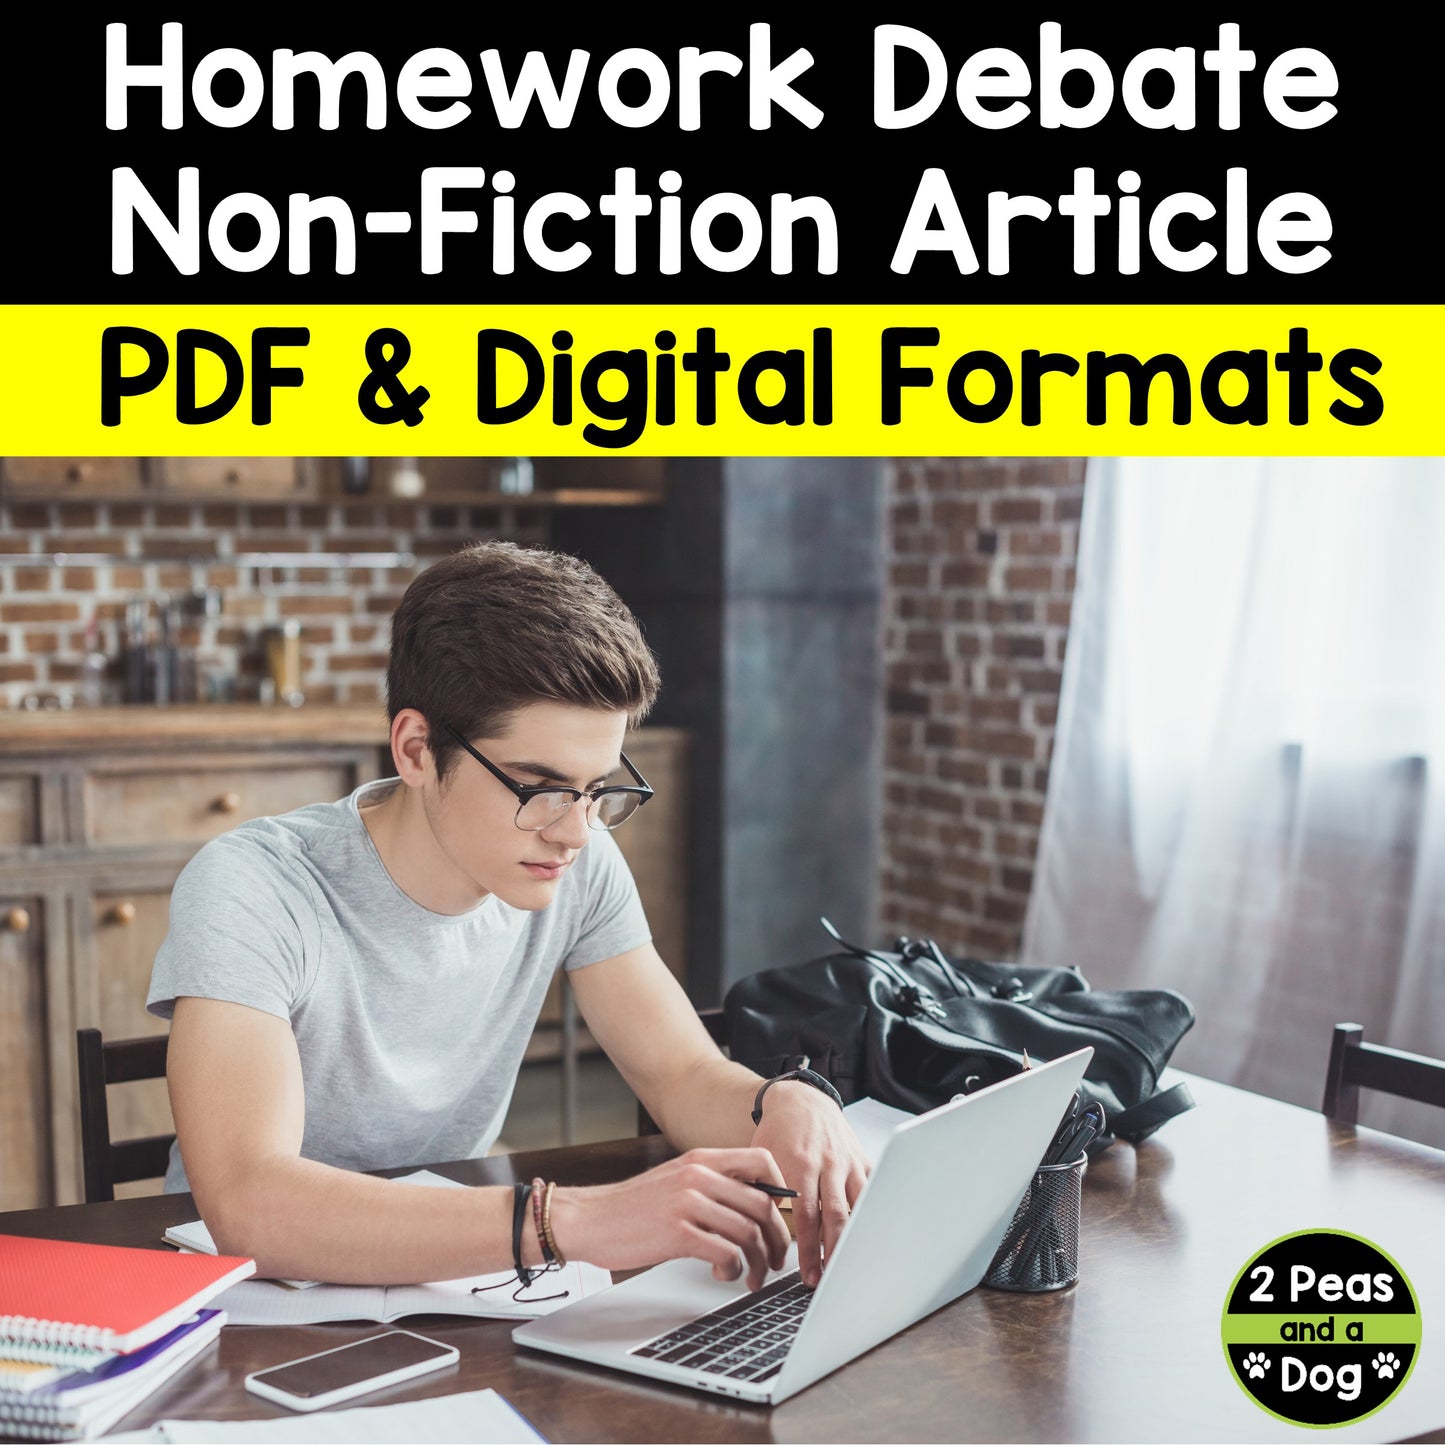 The Homework Debate Non-Fiction Article